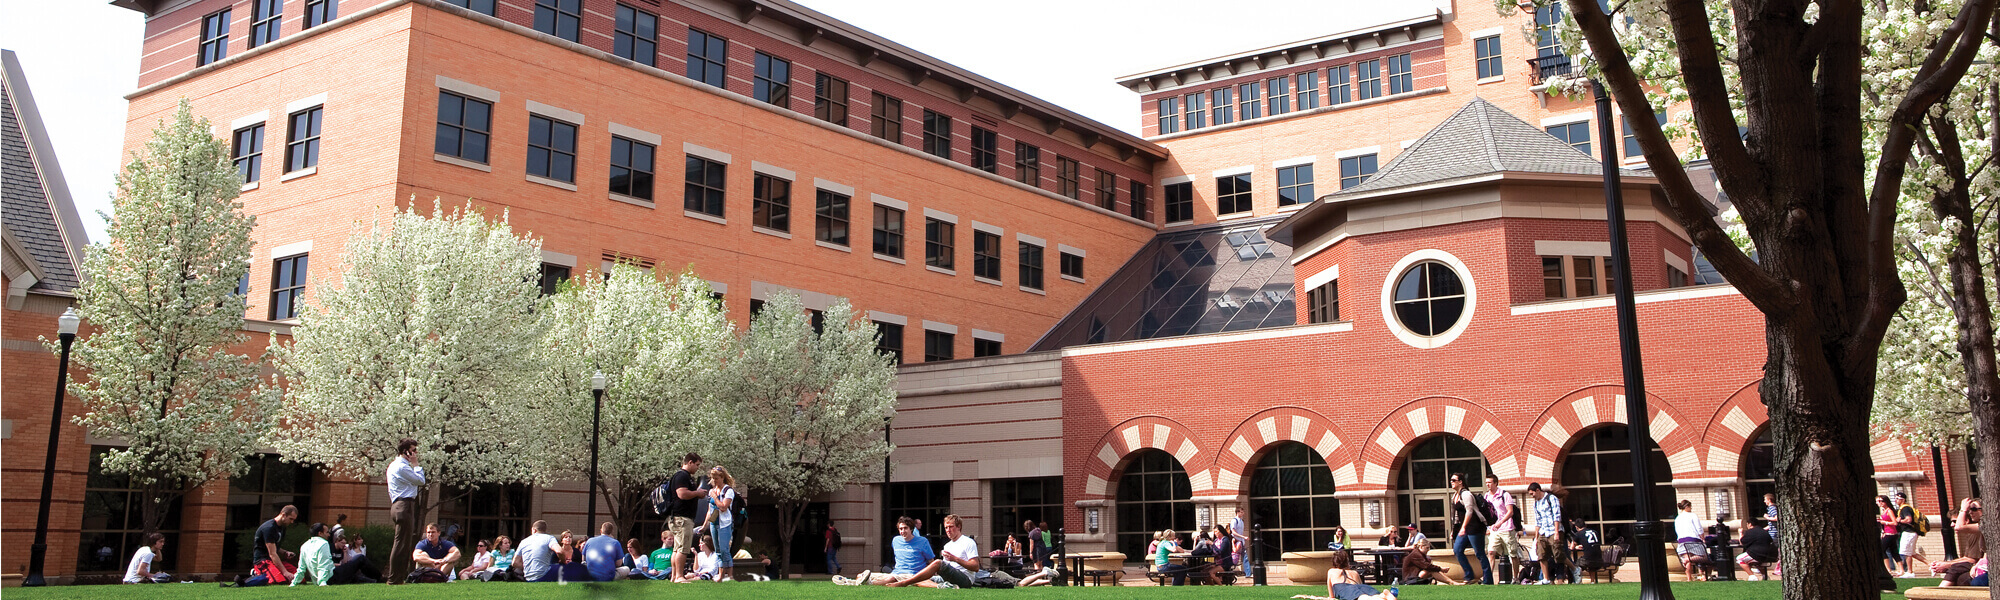 The Richard M. DeVos Center at Grand Valley State University.